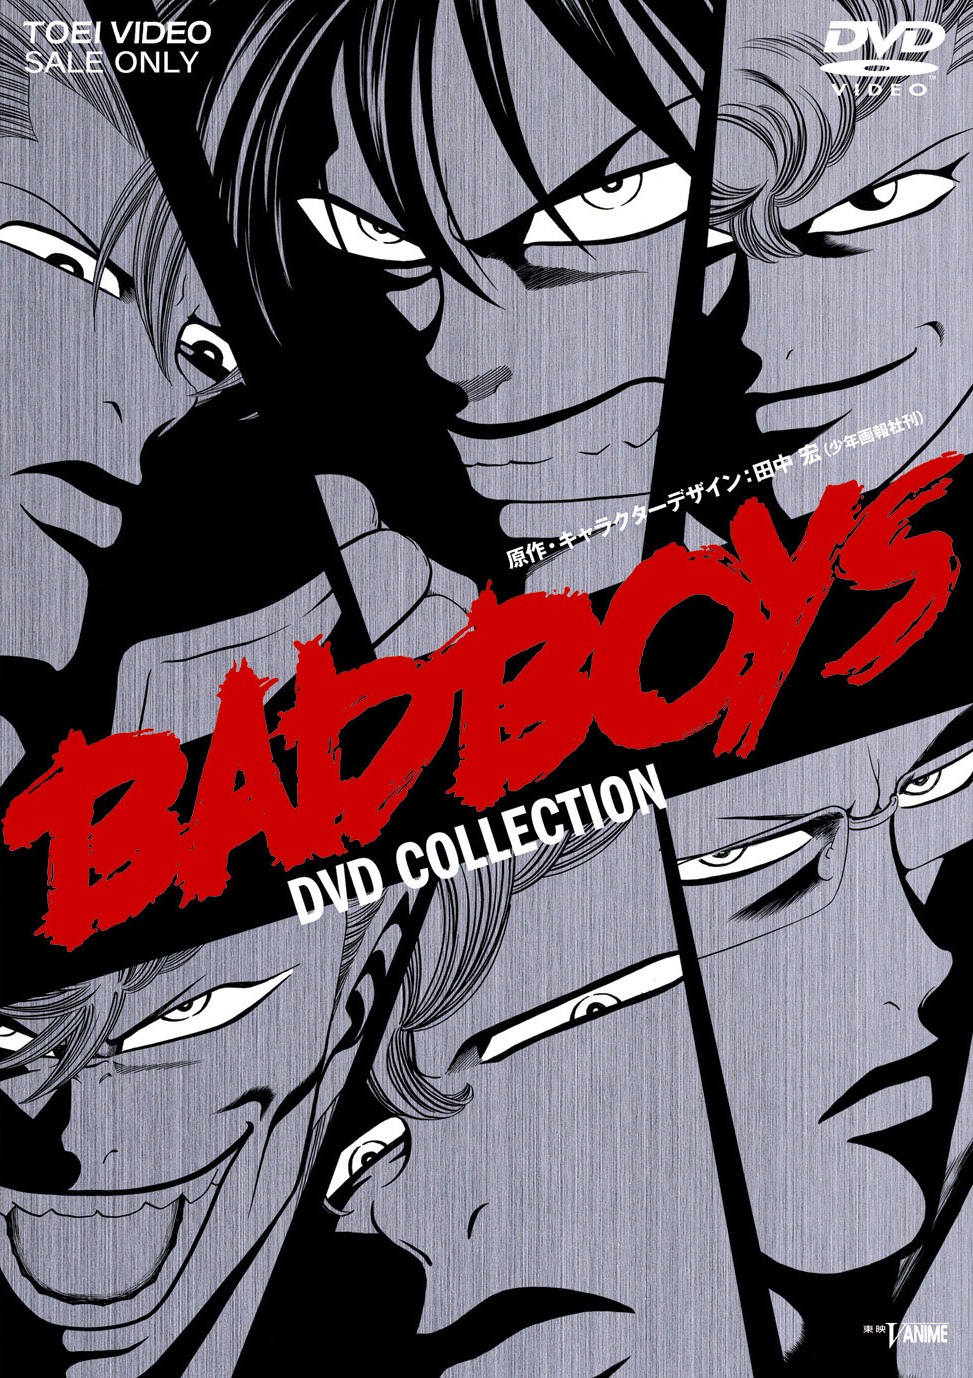 BADBOYS DVDコレクション